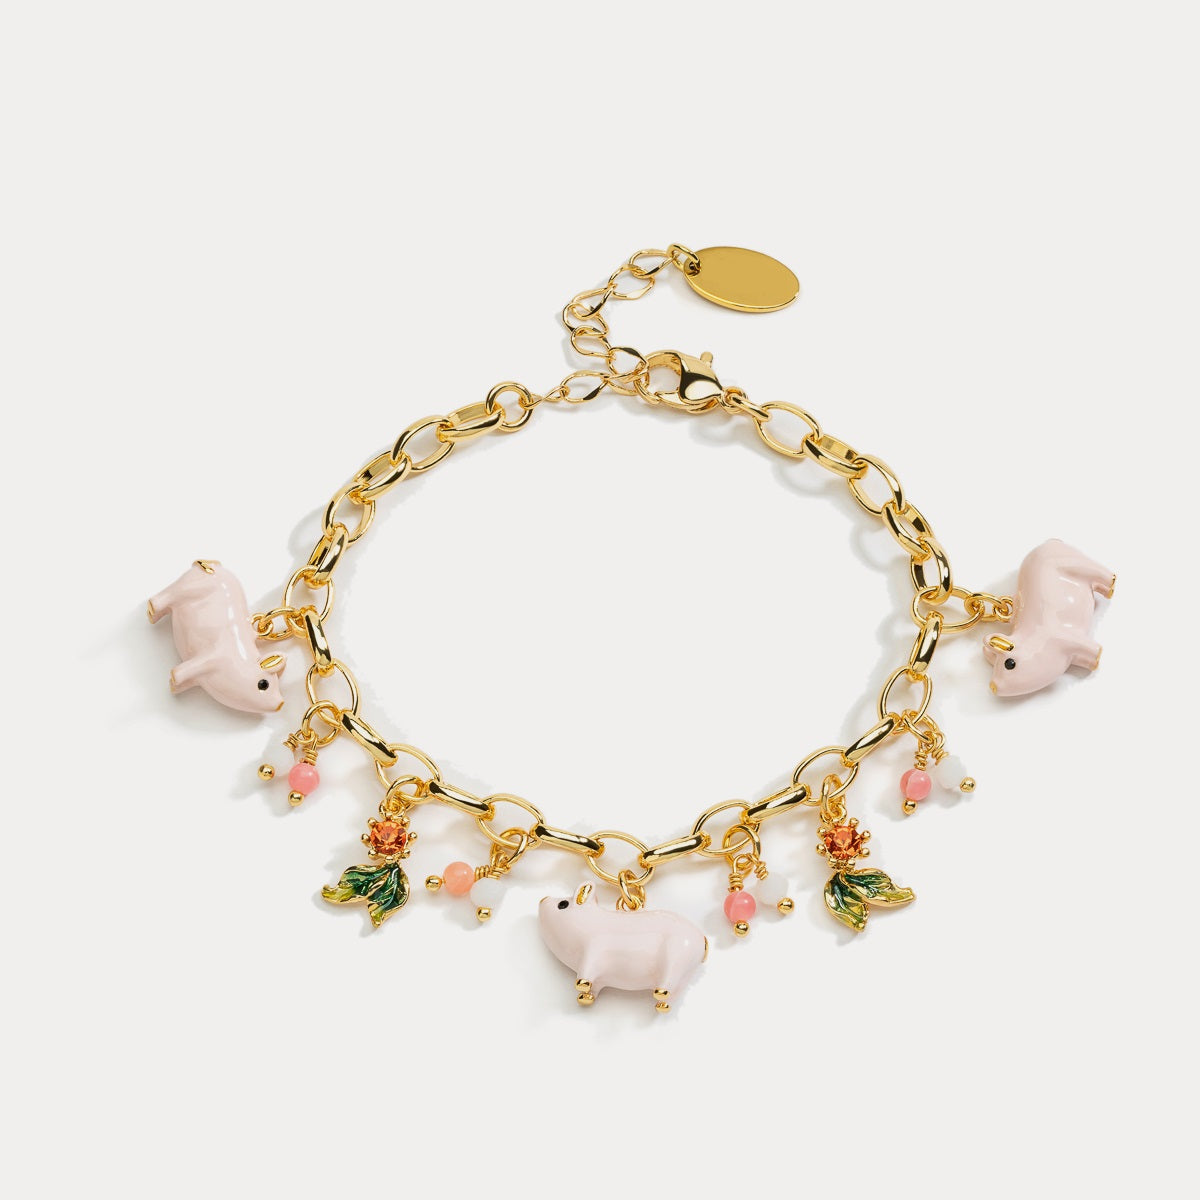 Pig zodiac bracelet